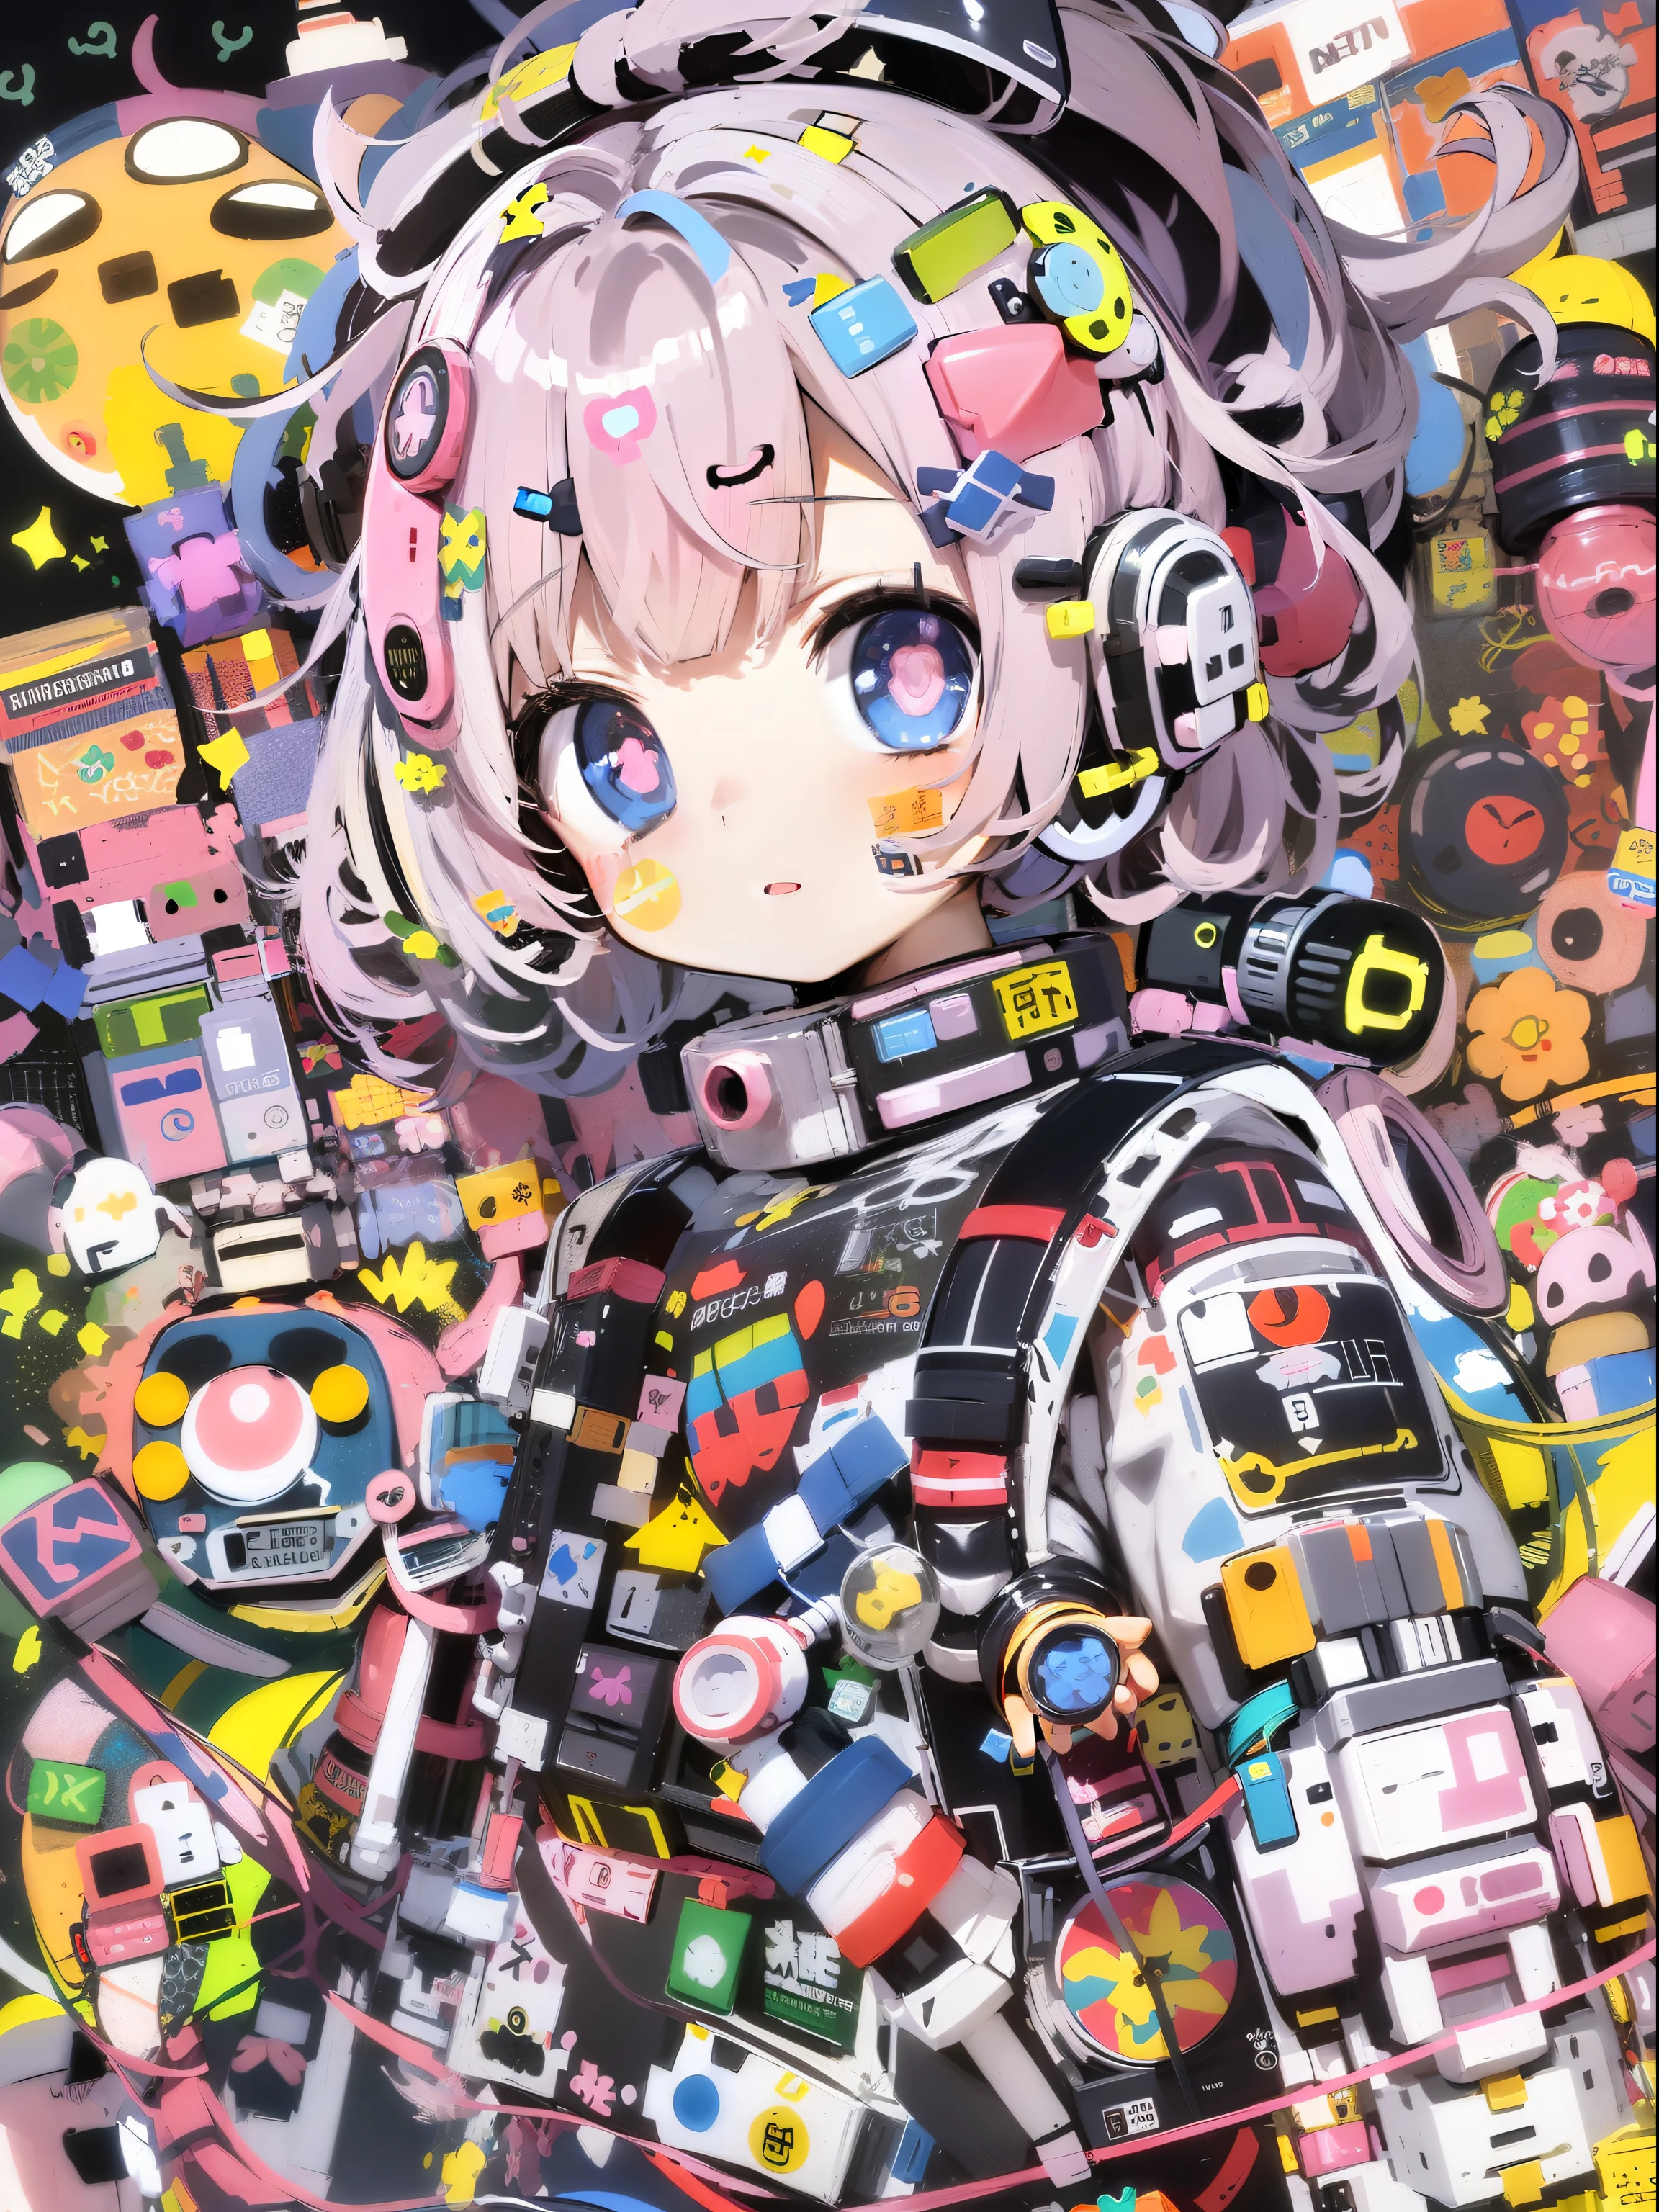 Anime Mädchen with a lot of stickers on her head, Decora inspiriert illustrations, bestes Anime 4k Konachan-Hintergrundbild, Anime-Roboter gemischt mit Bio, vollrobotergesteuert!! Mädchen, Anime Manga Roboter!! anime Frau, portrait anime space cadet Mädchen, verträumter psychedelischer Anime, Anime-Mecha-Ästhetik, Robotermädchen, Splash Art Anime , Decora inspiriert, hyper bunt